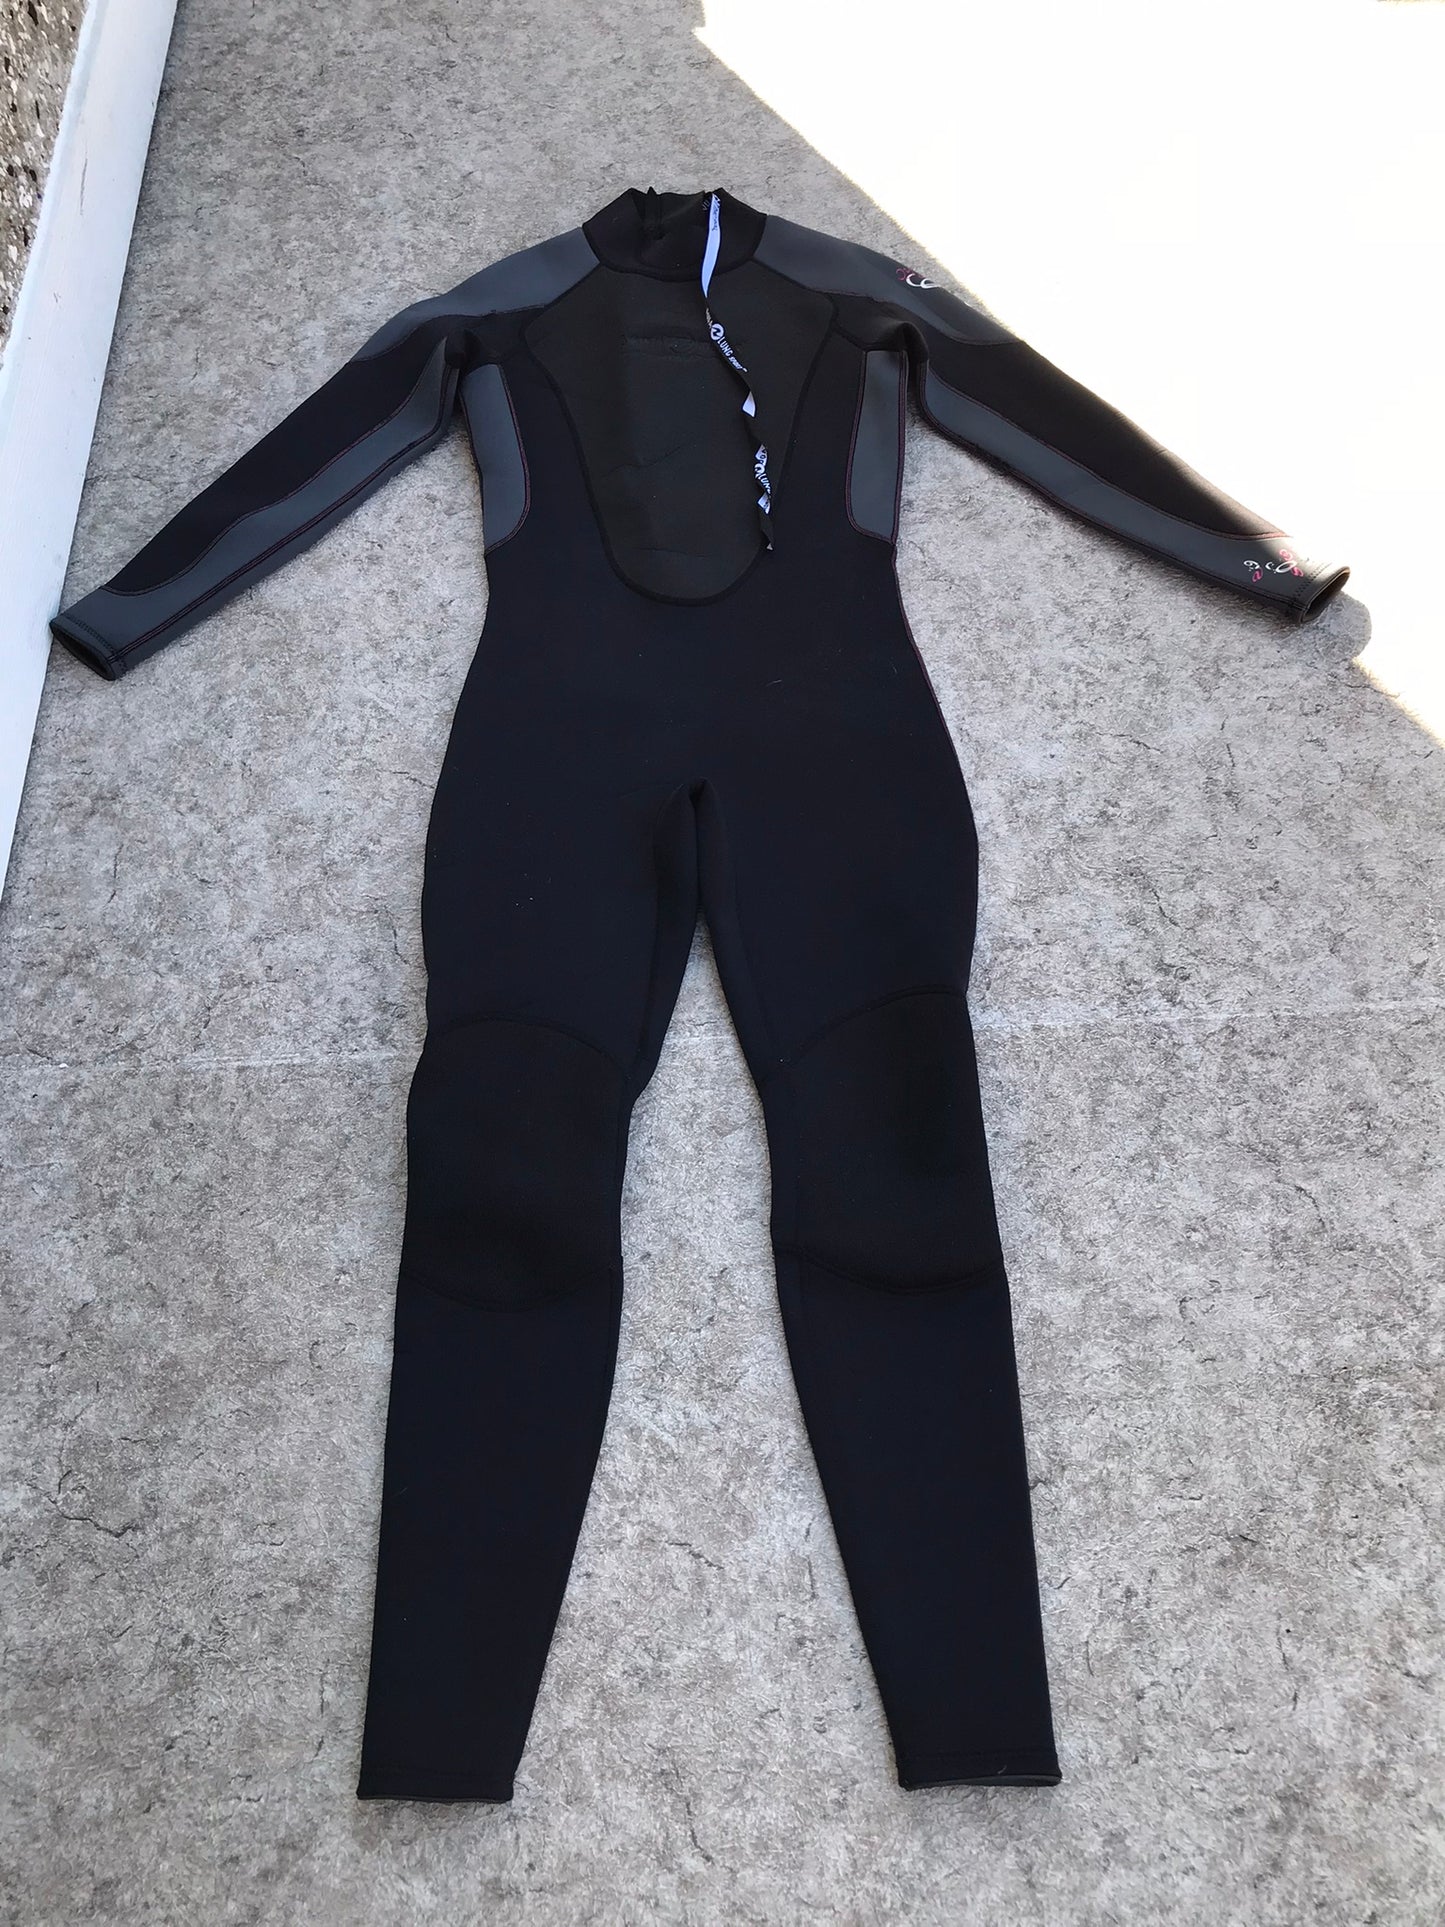 Wetsuit Ladies Size 13-14 Full 3 mm Neoprene Aqua Lung Surf, Kayak, PaddleBoard Black Fushia Like New